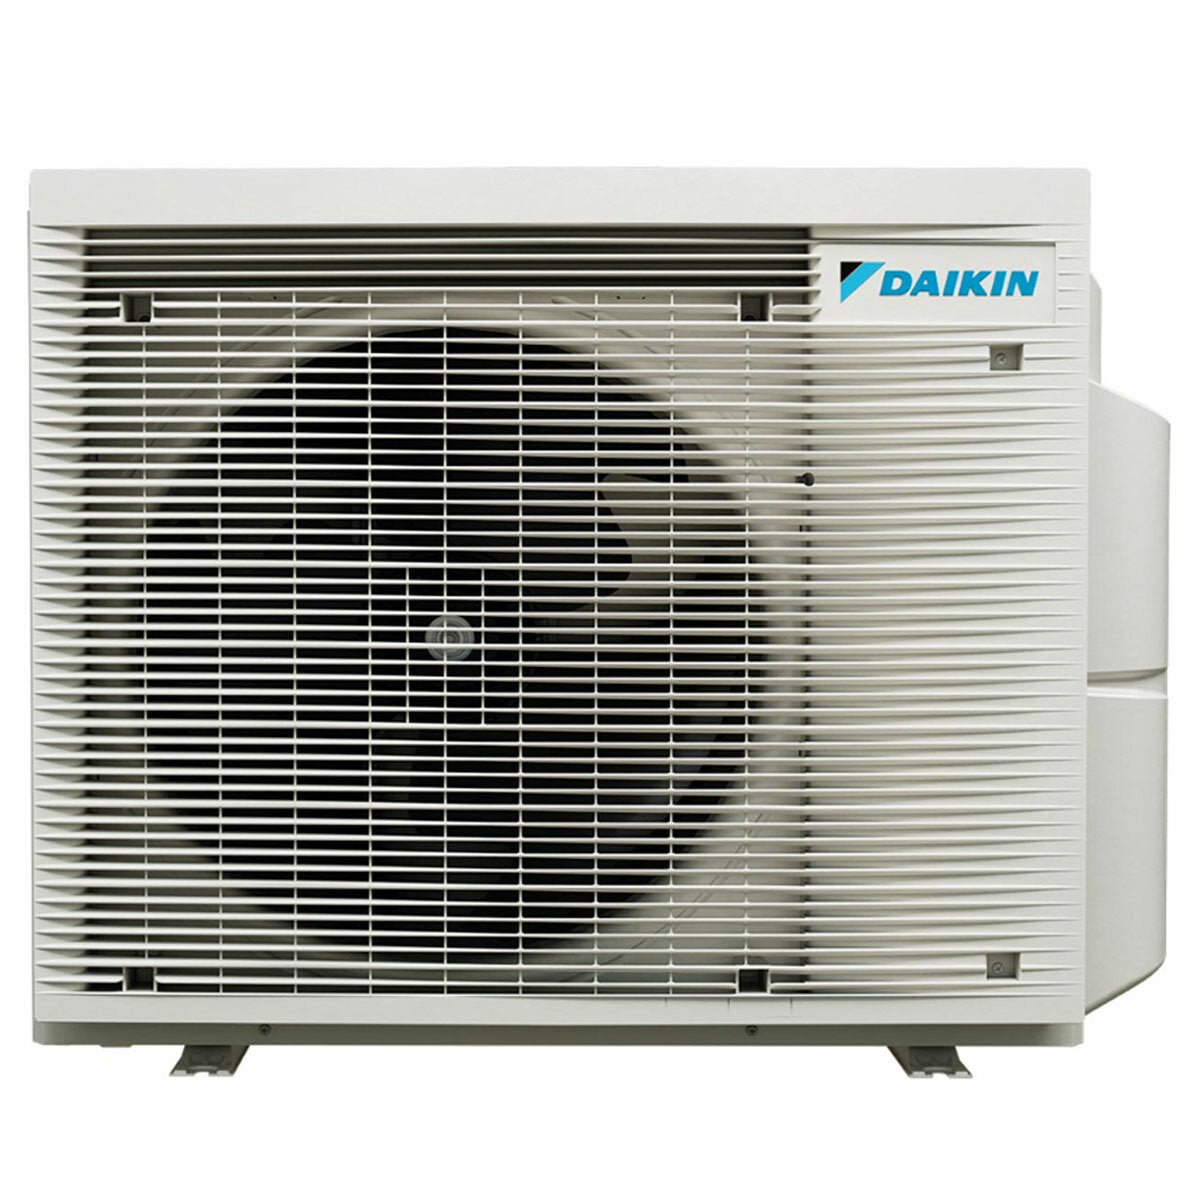 Daikin Mini Sky FDXM-F9 ducted air conditioner trial split 9000+9000+9000 BTU inverter A+++ external 5.2 kW